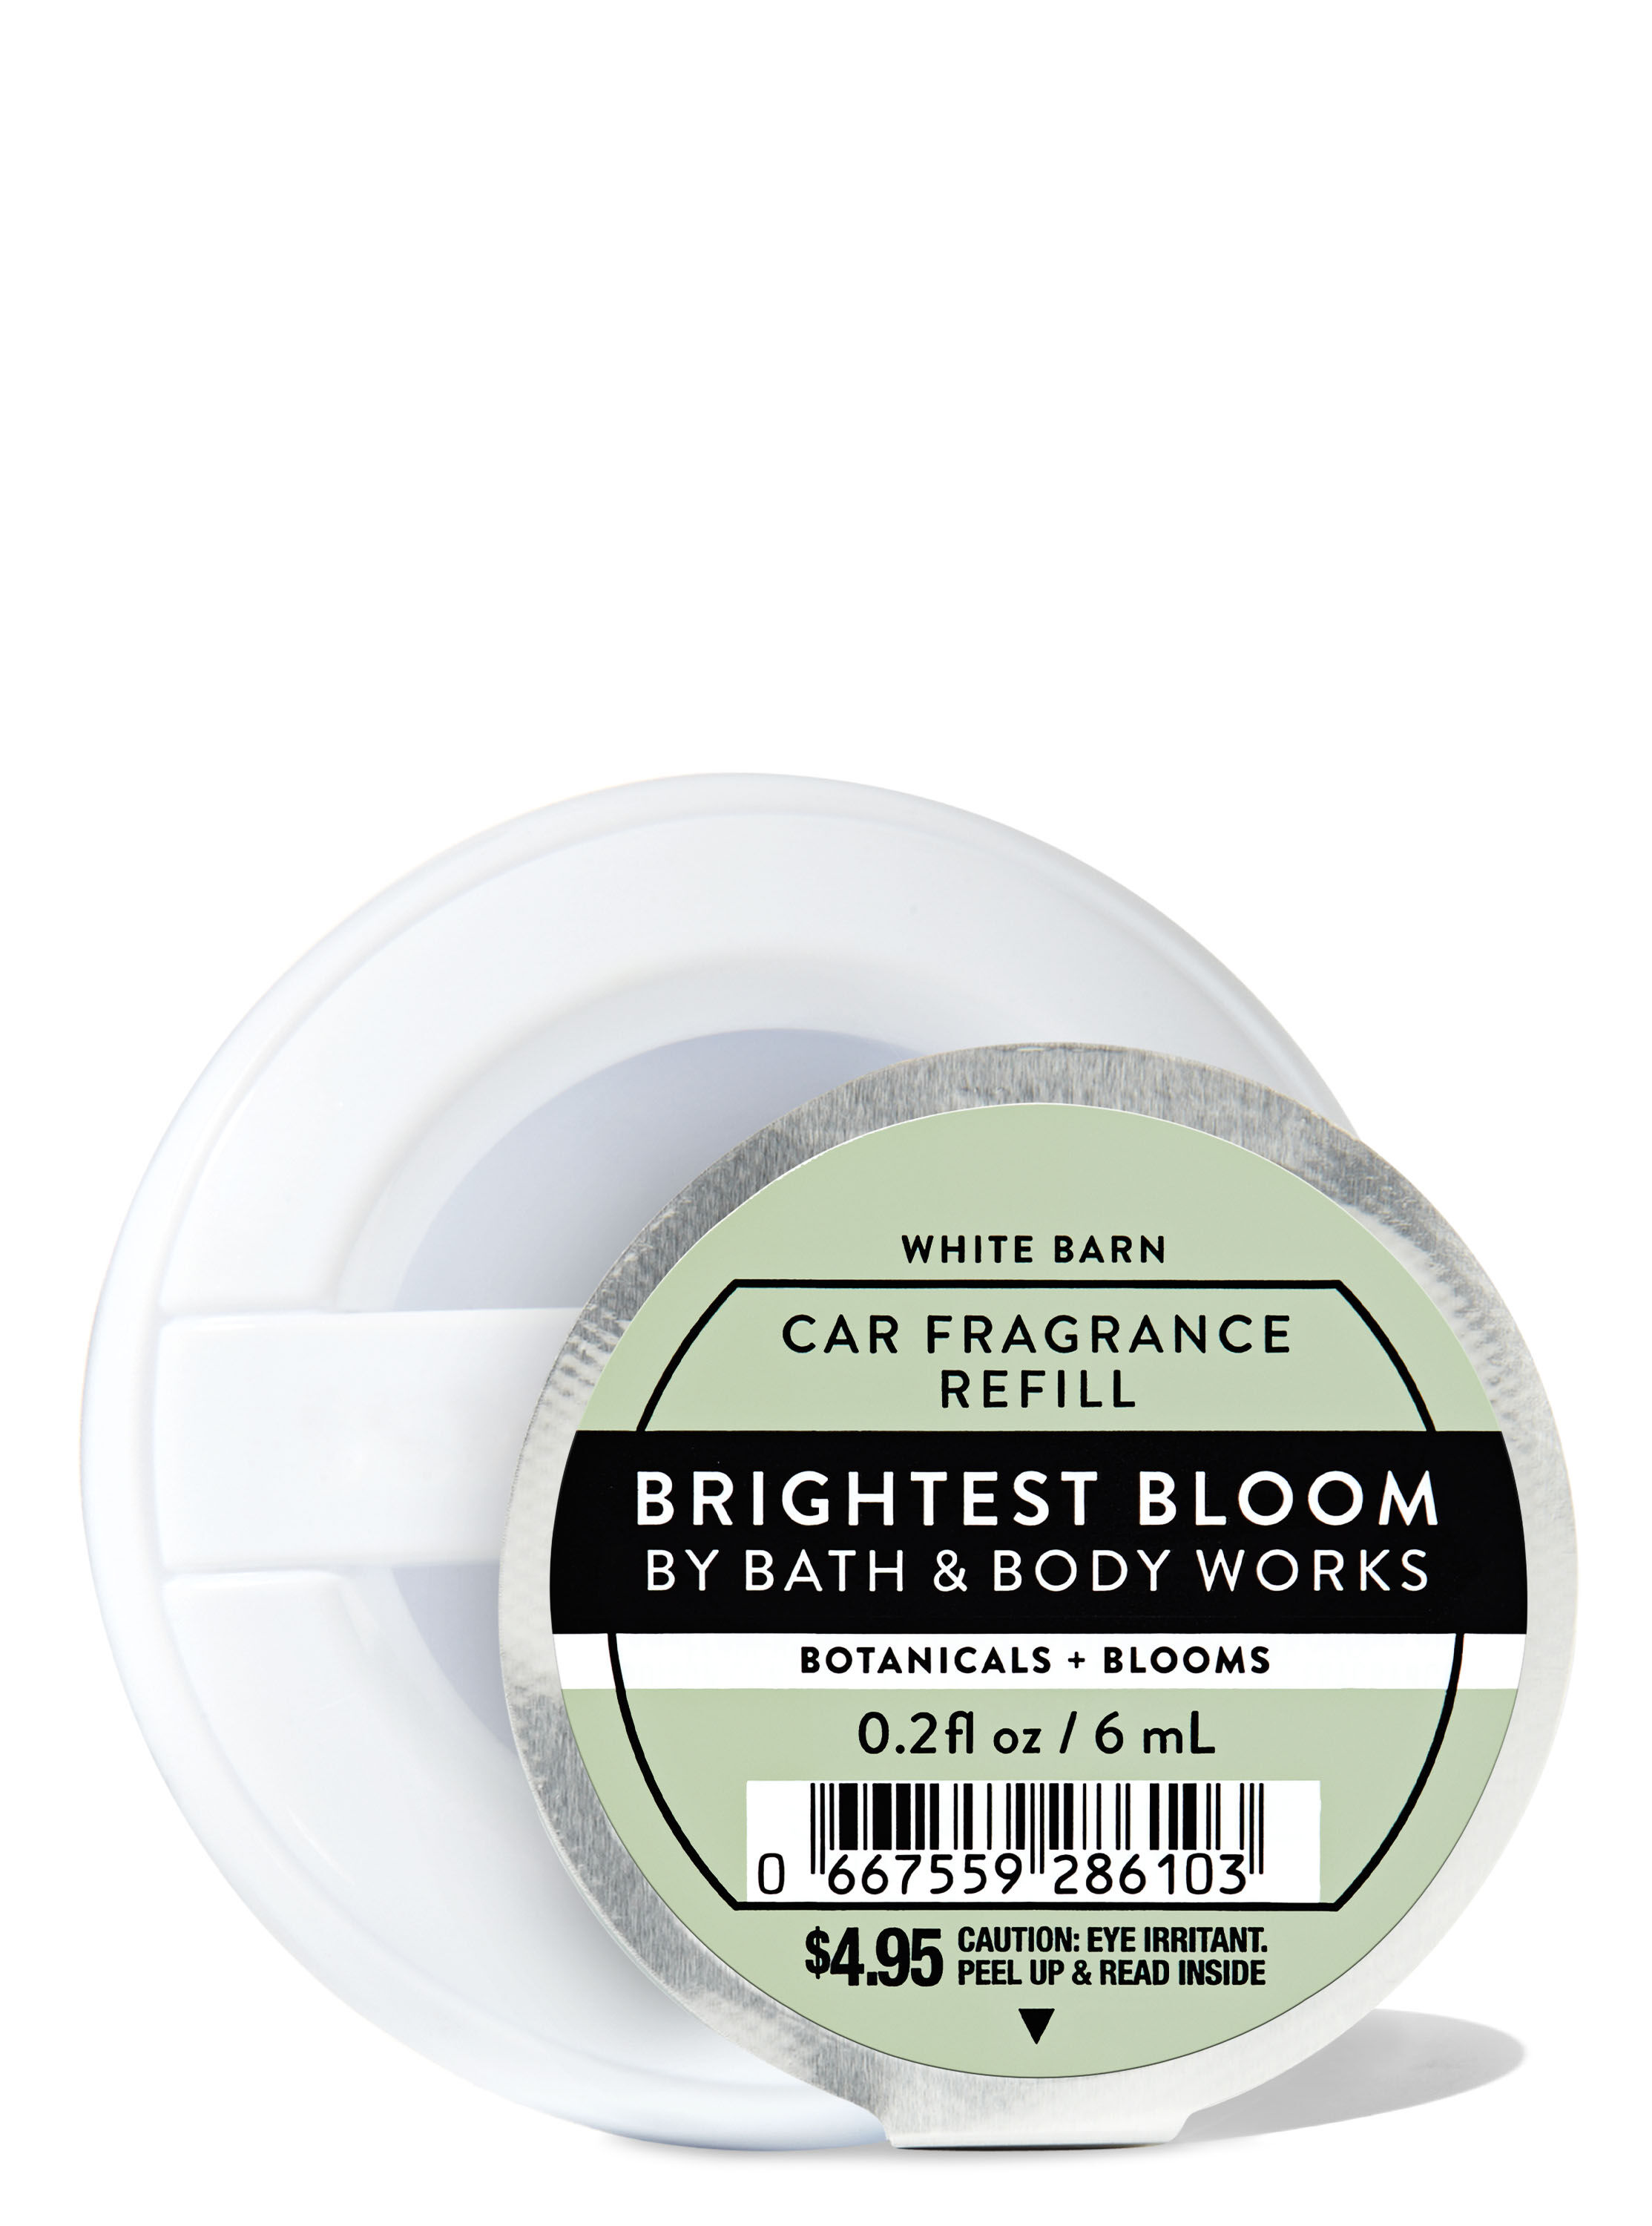 Brightest Bloom Car Fragrance Refill